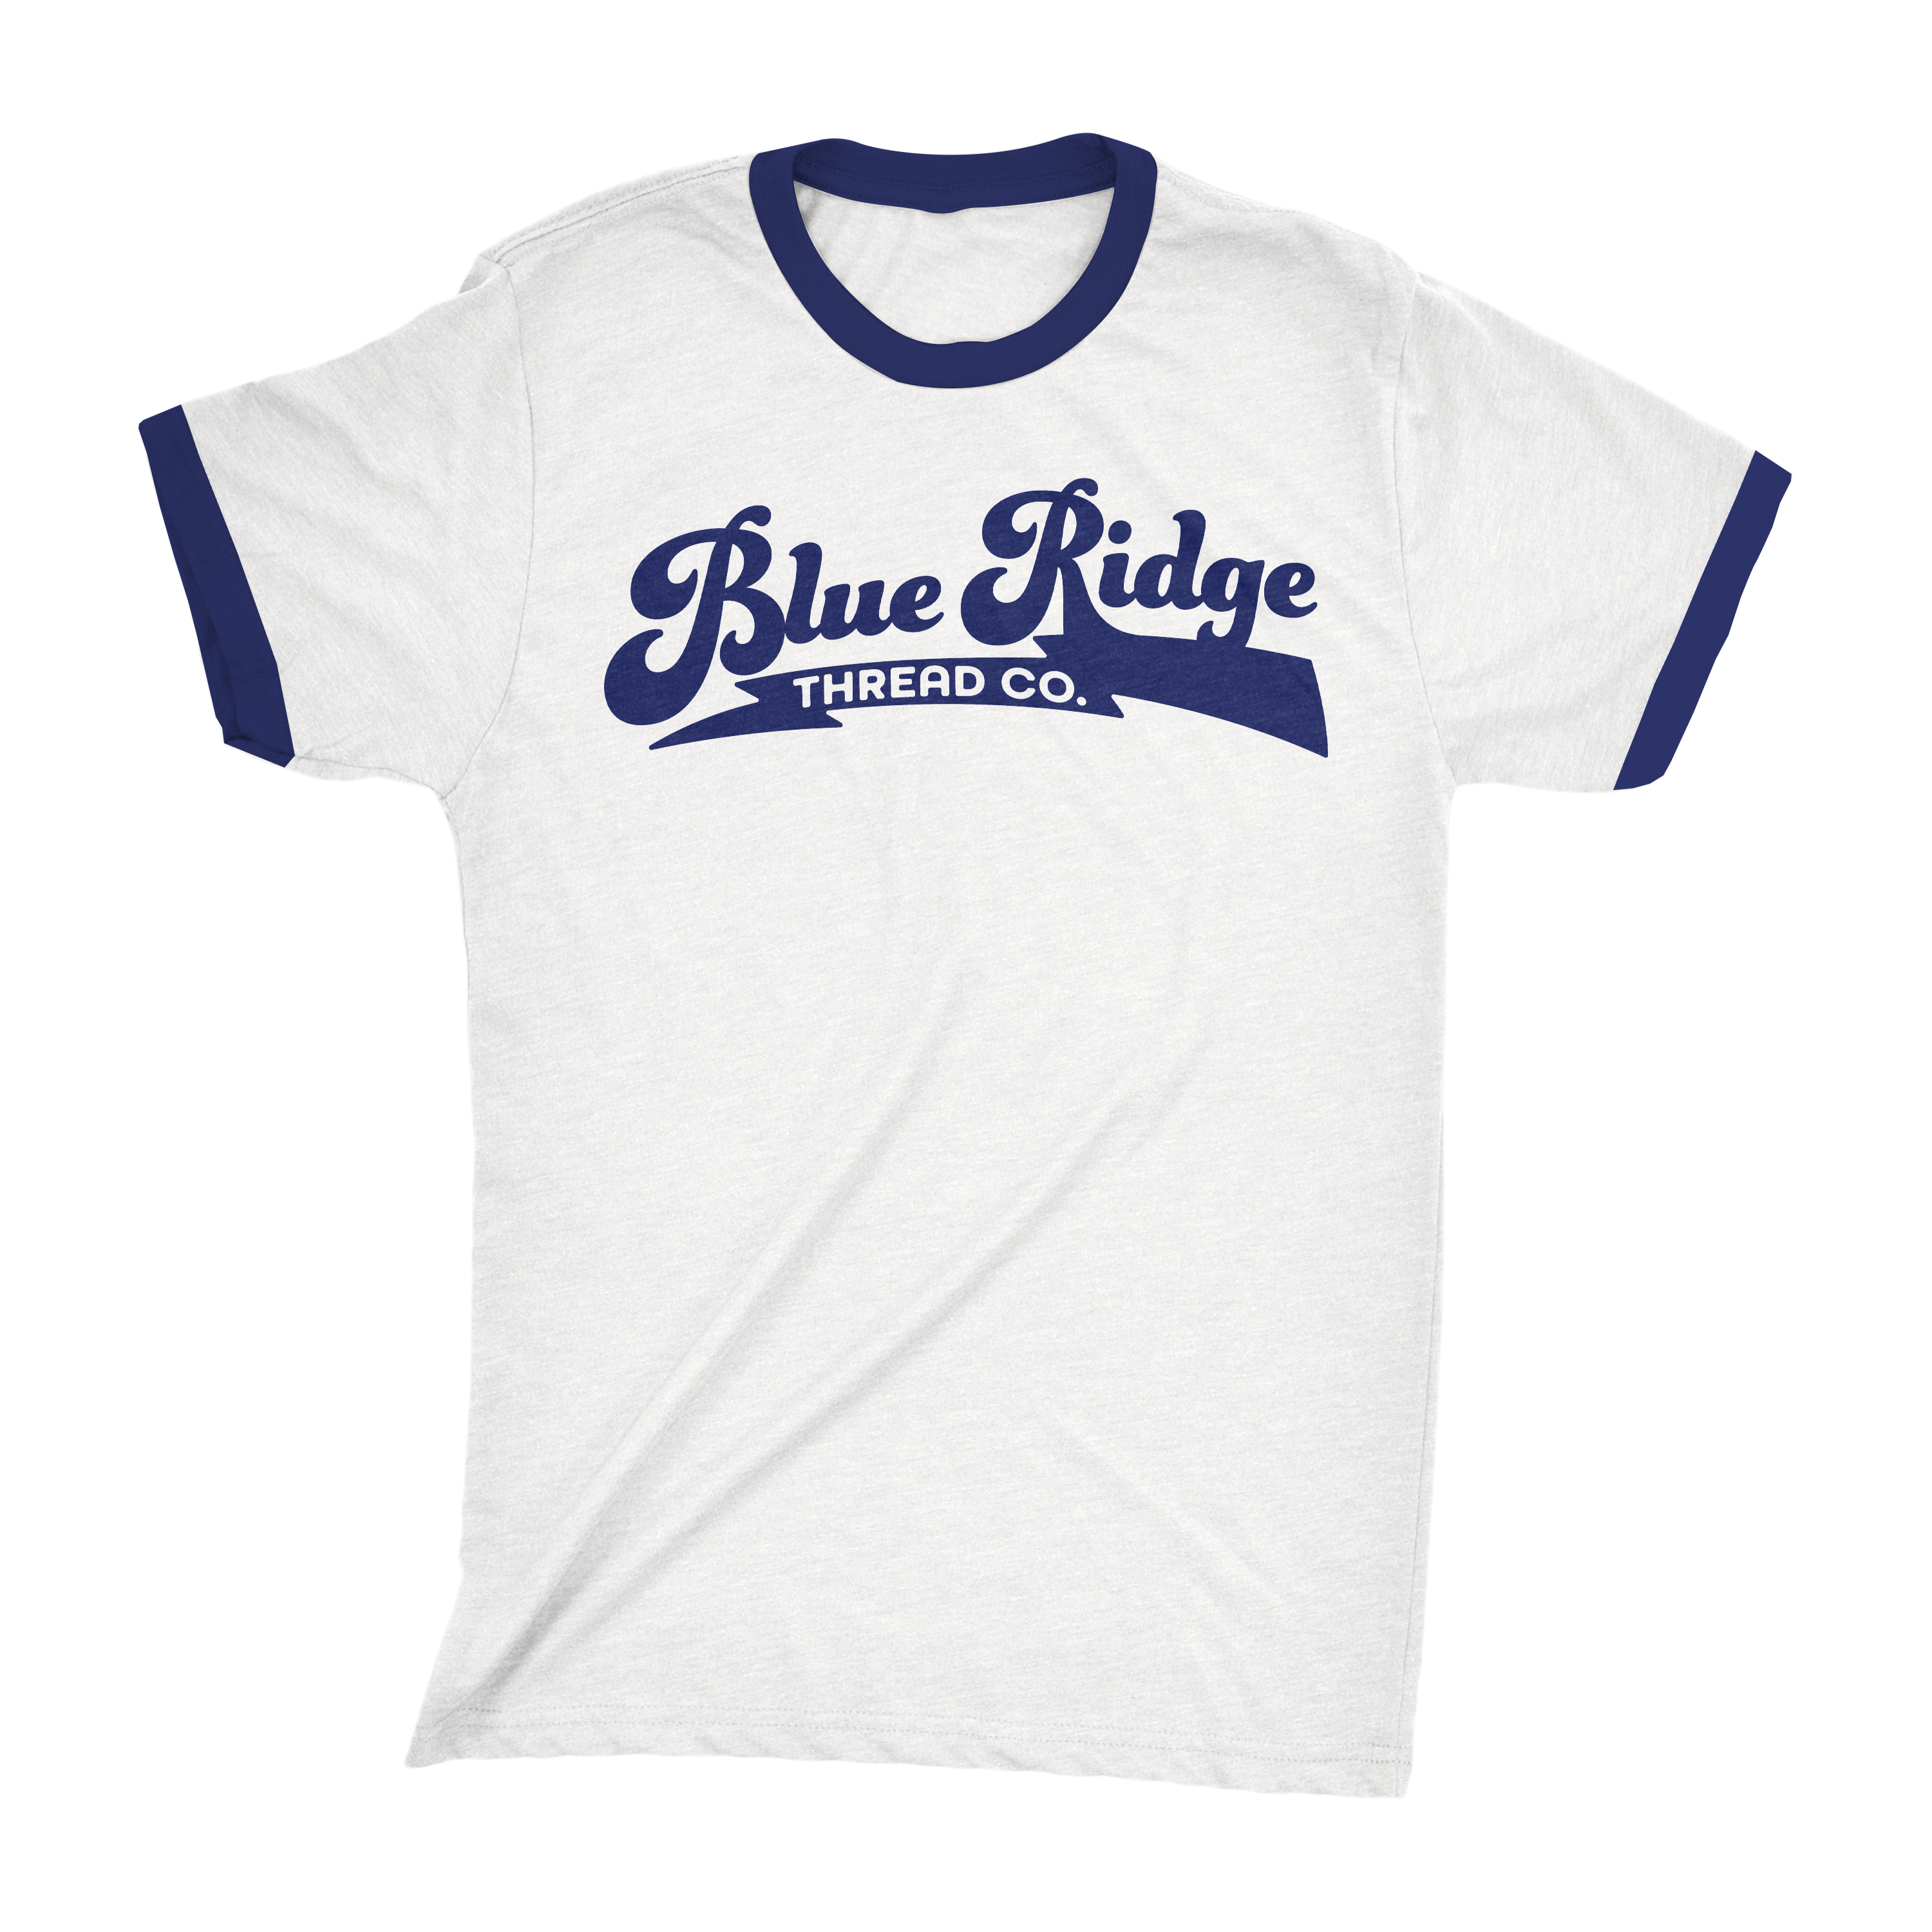 blue ridge shirts,SAVE 74% 